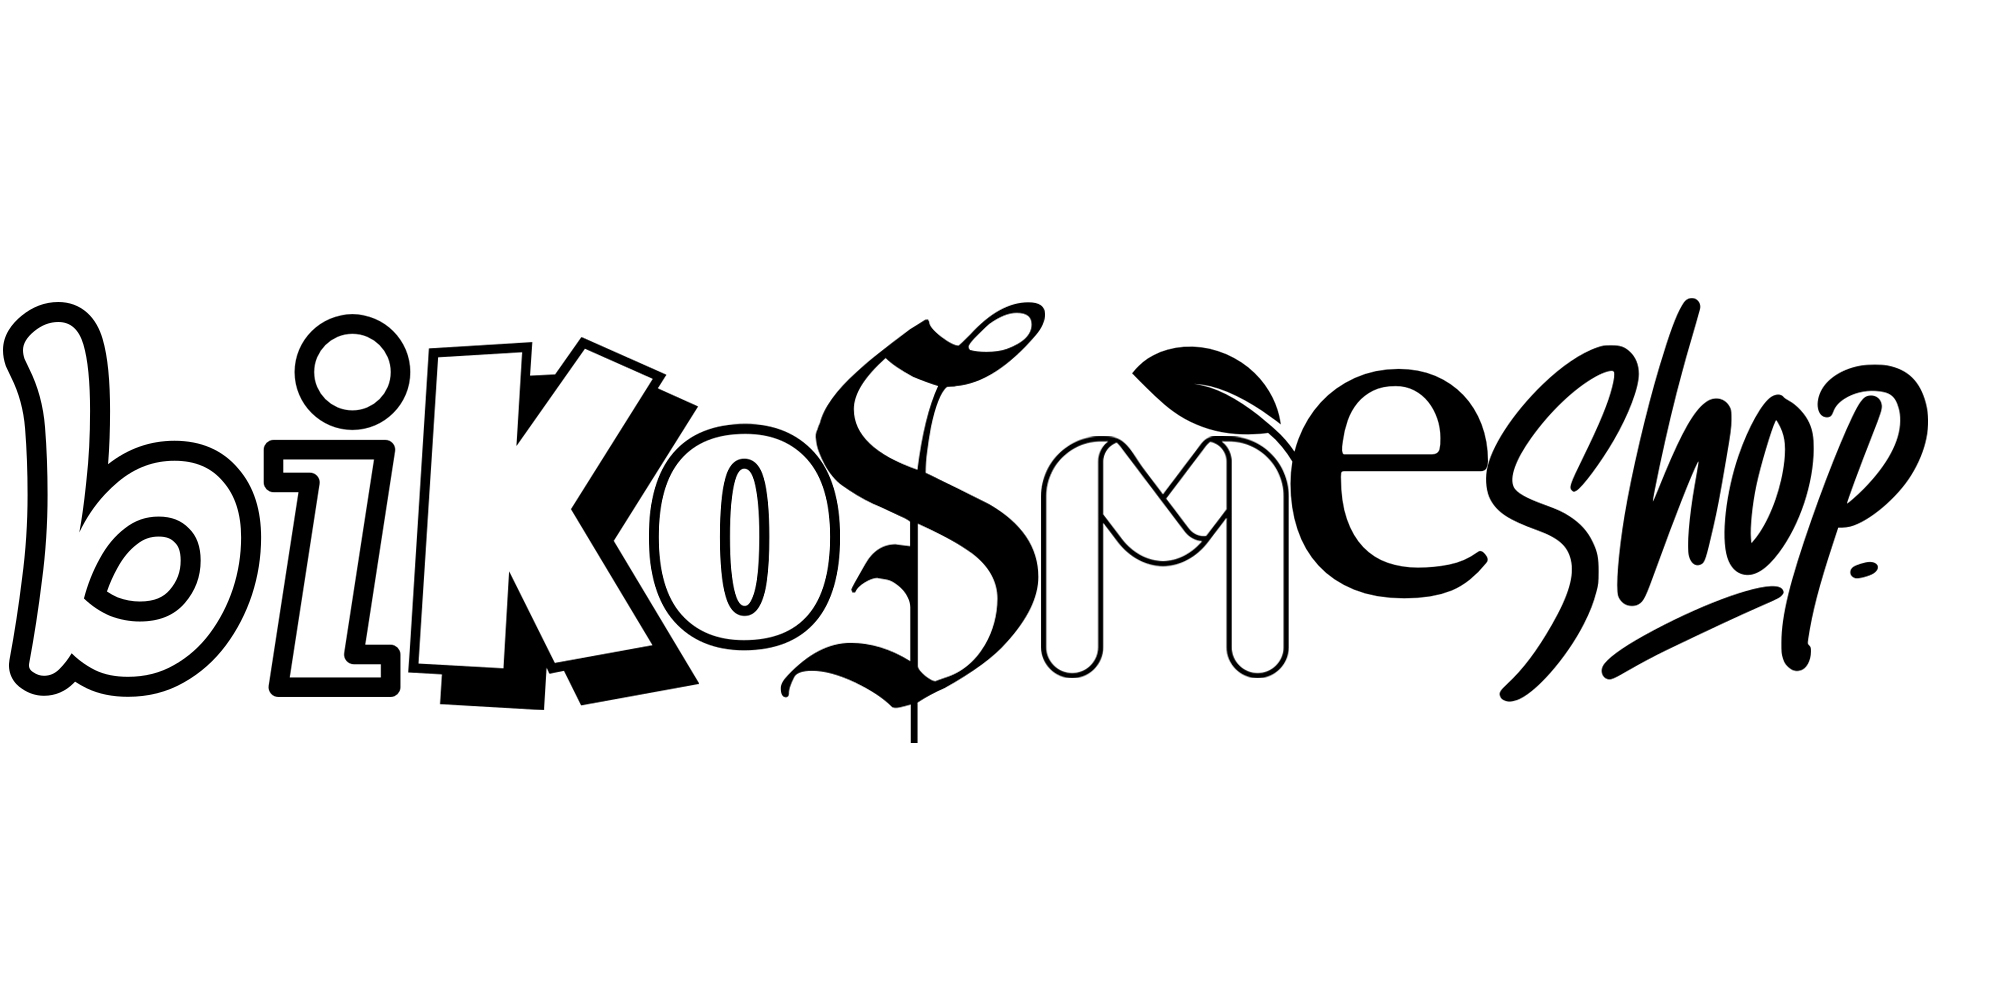 bikosmeshop ロゴ